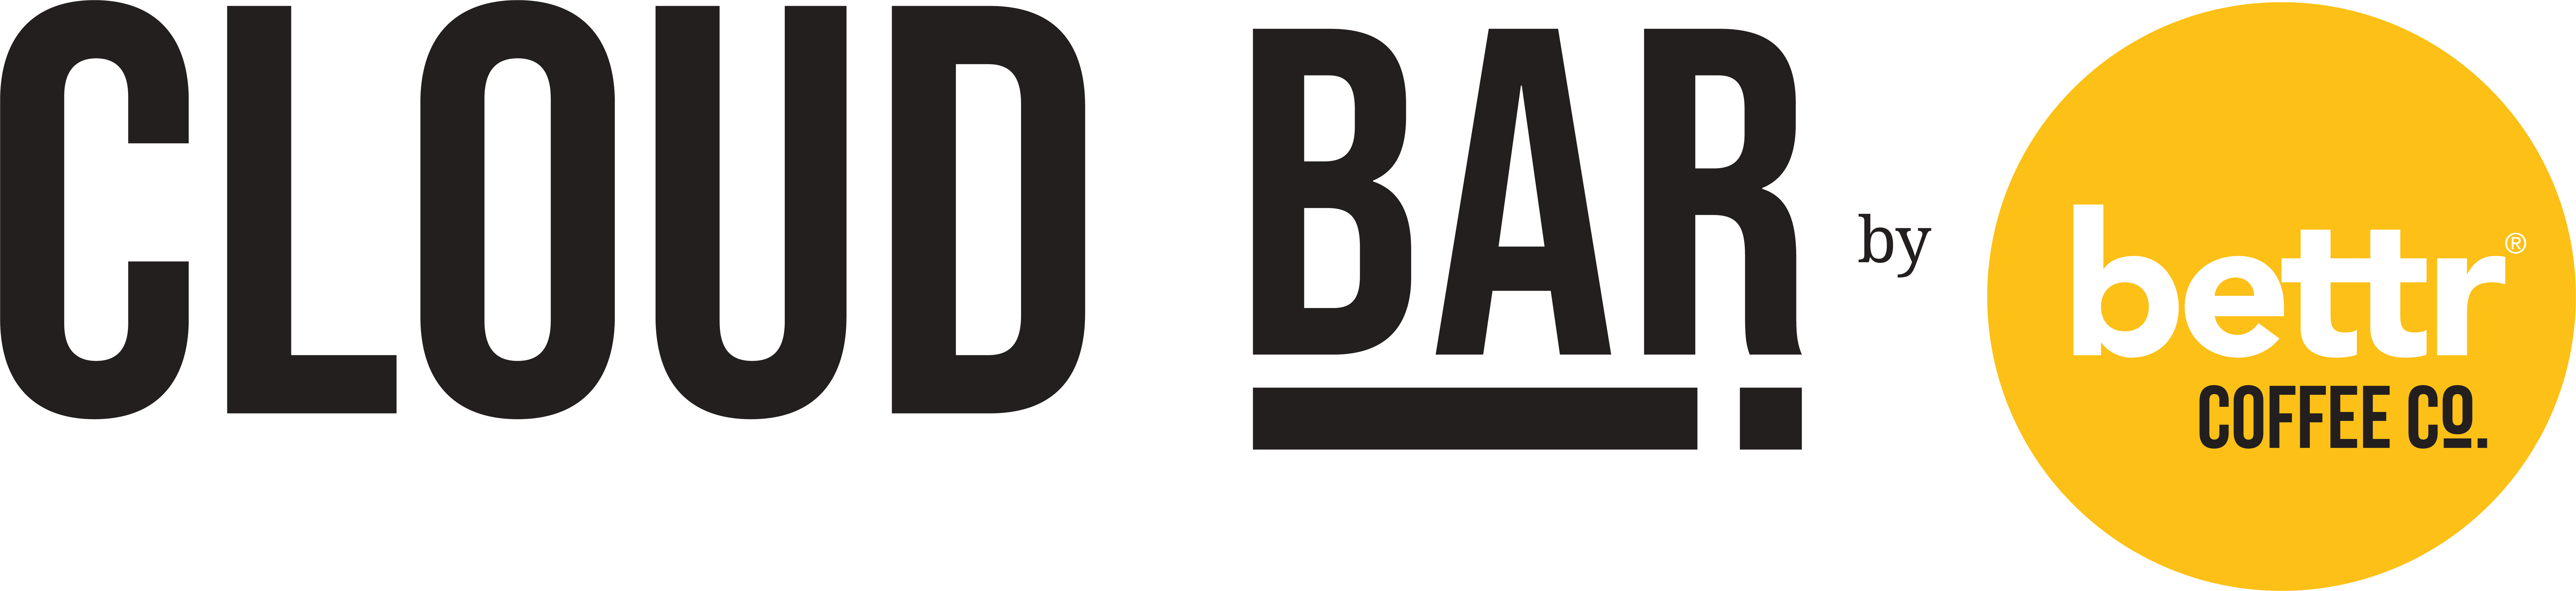 bettr-cloud-bar-logo